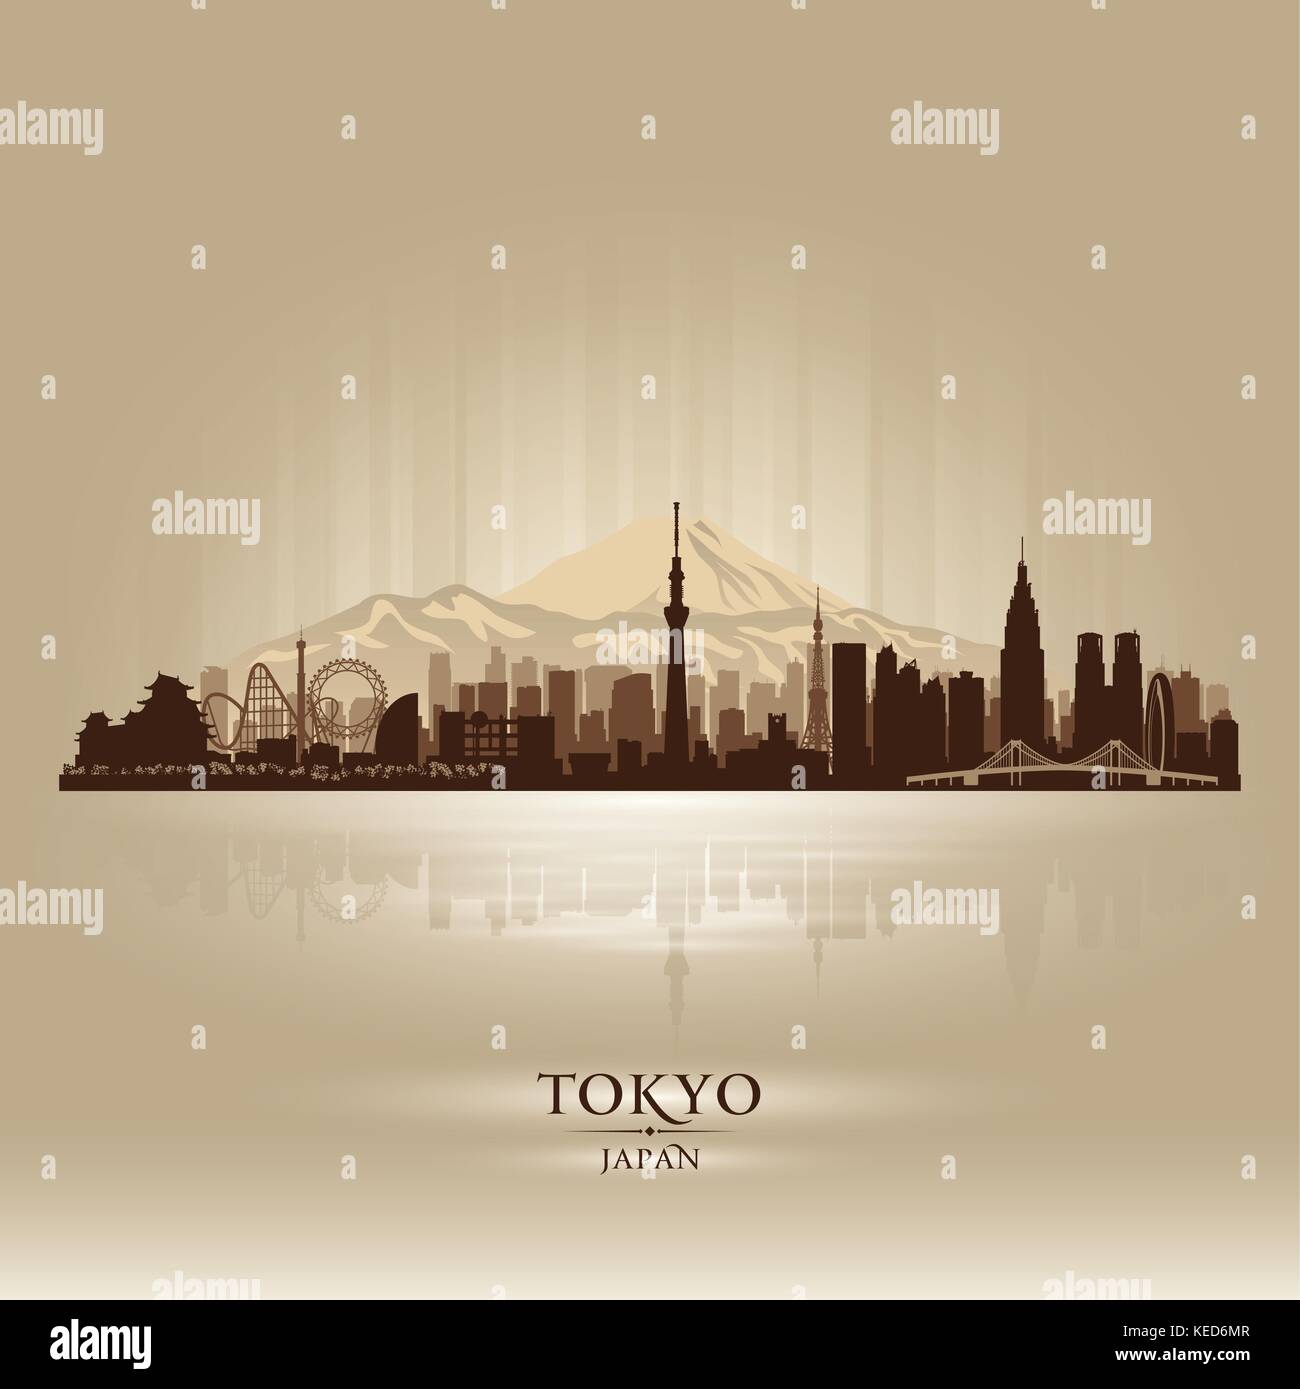 Tokyo Japan city skyline vector silhouette illustration Stock Vector